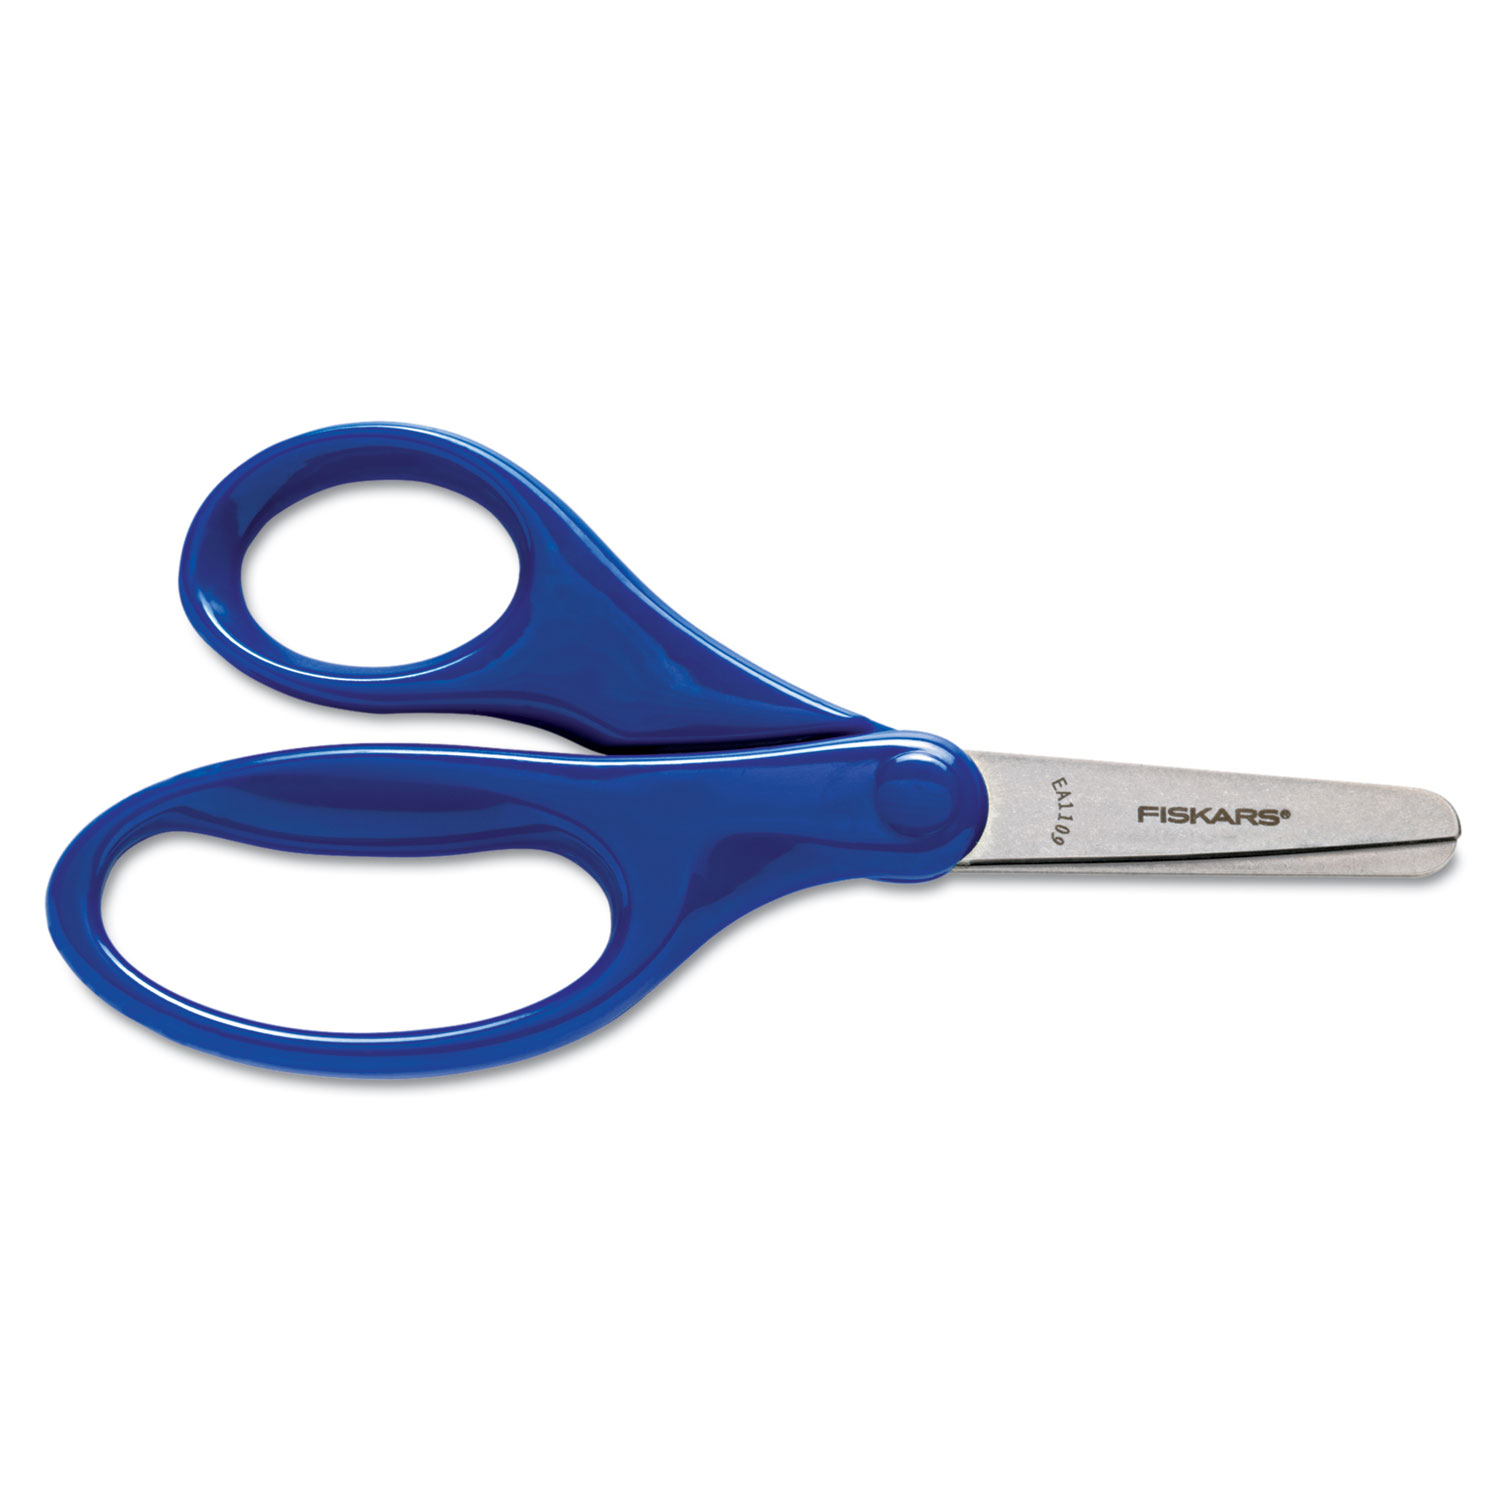 Classroom Scissors Round Tip, 5 Inches [24 PACK]